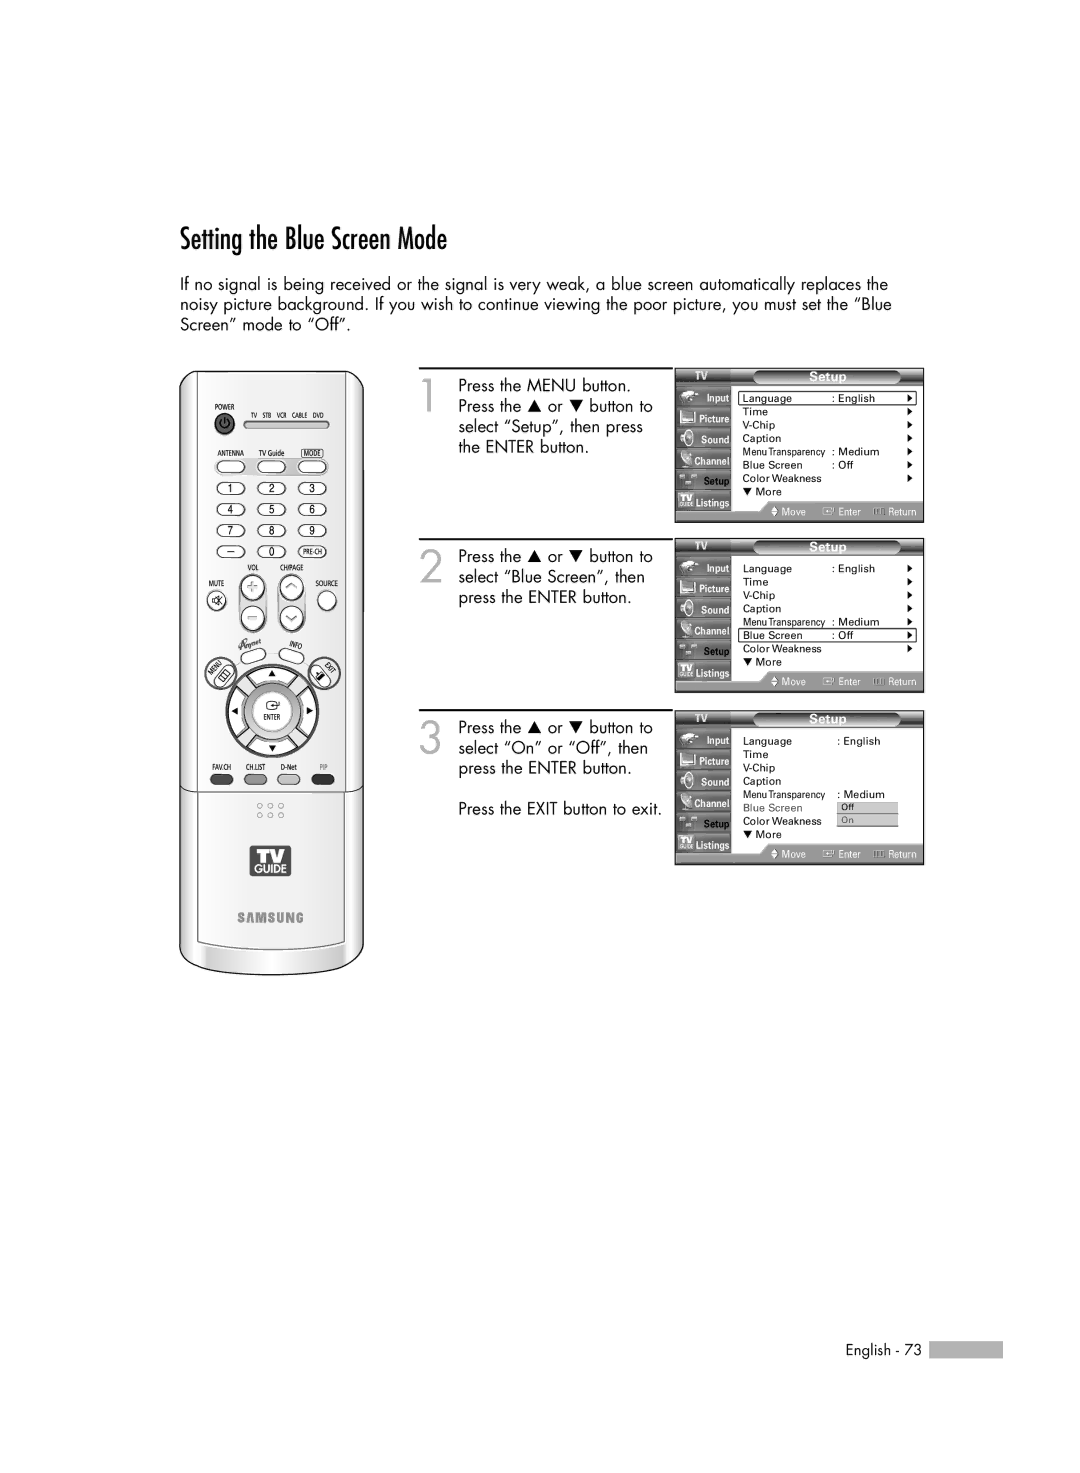 Samsung HL-R6767W manual Setting the Blue Screen Mode, Setup 